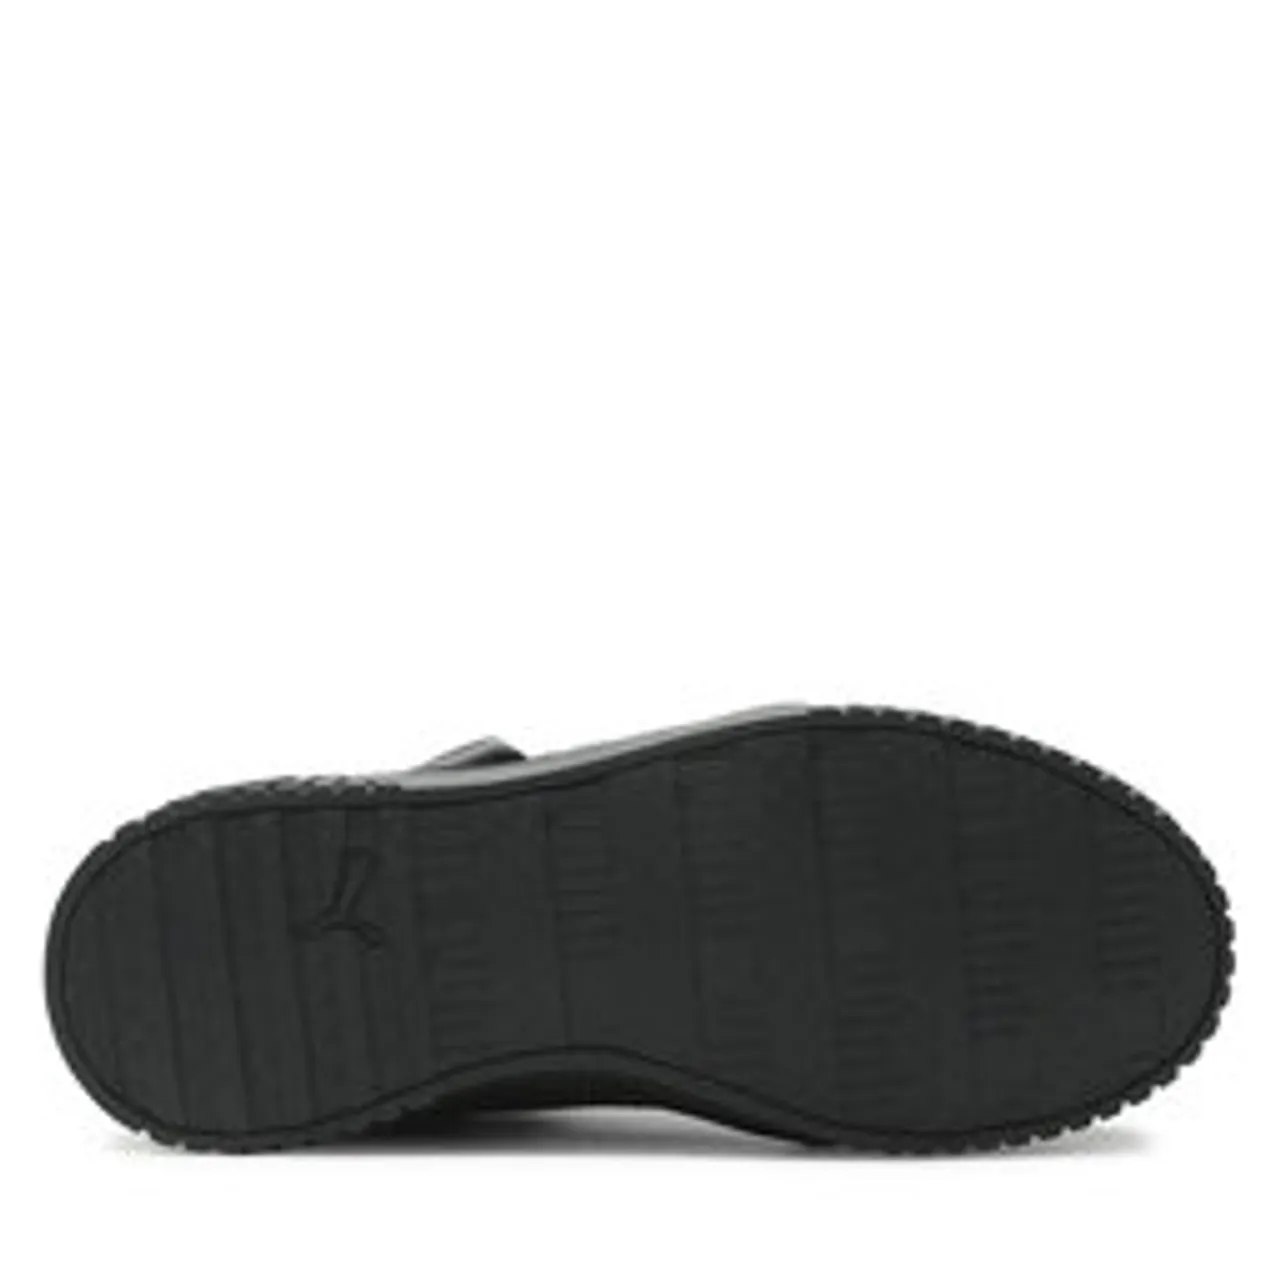 Sneakers Puma Carina 2.0 Mid Jr 387376 01 Puma Black/Black/Shadow